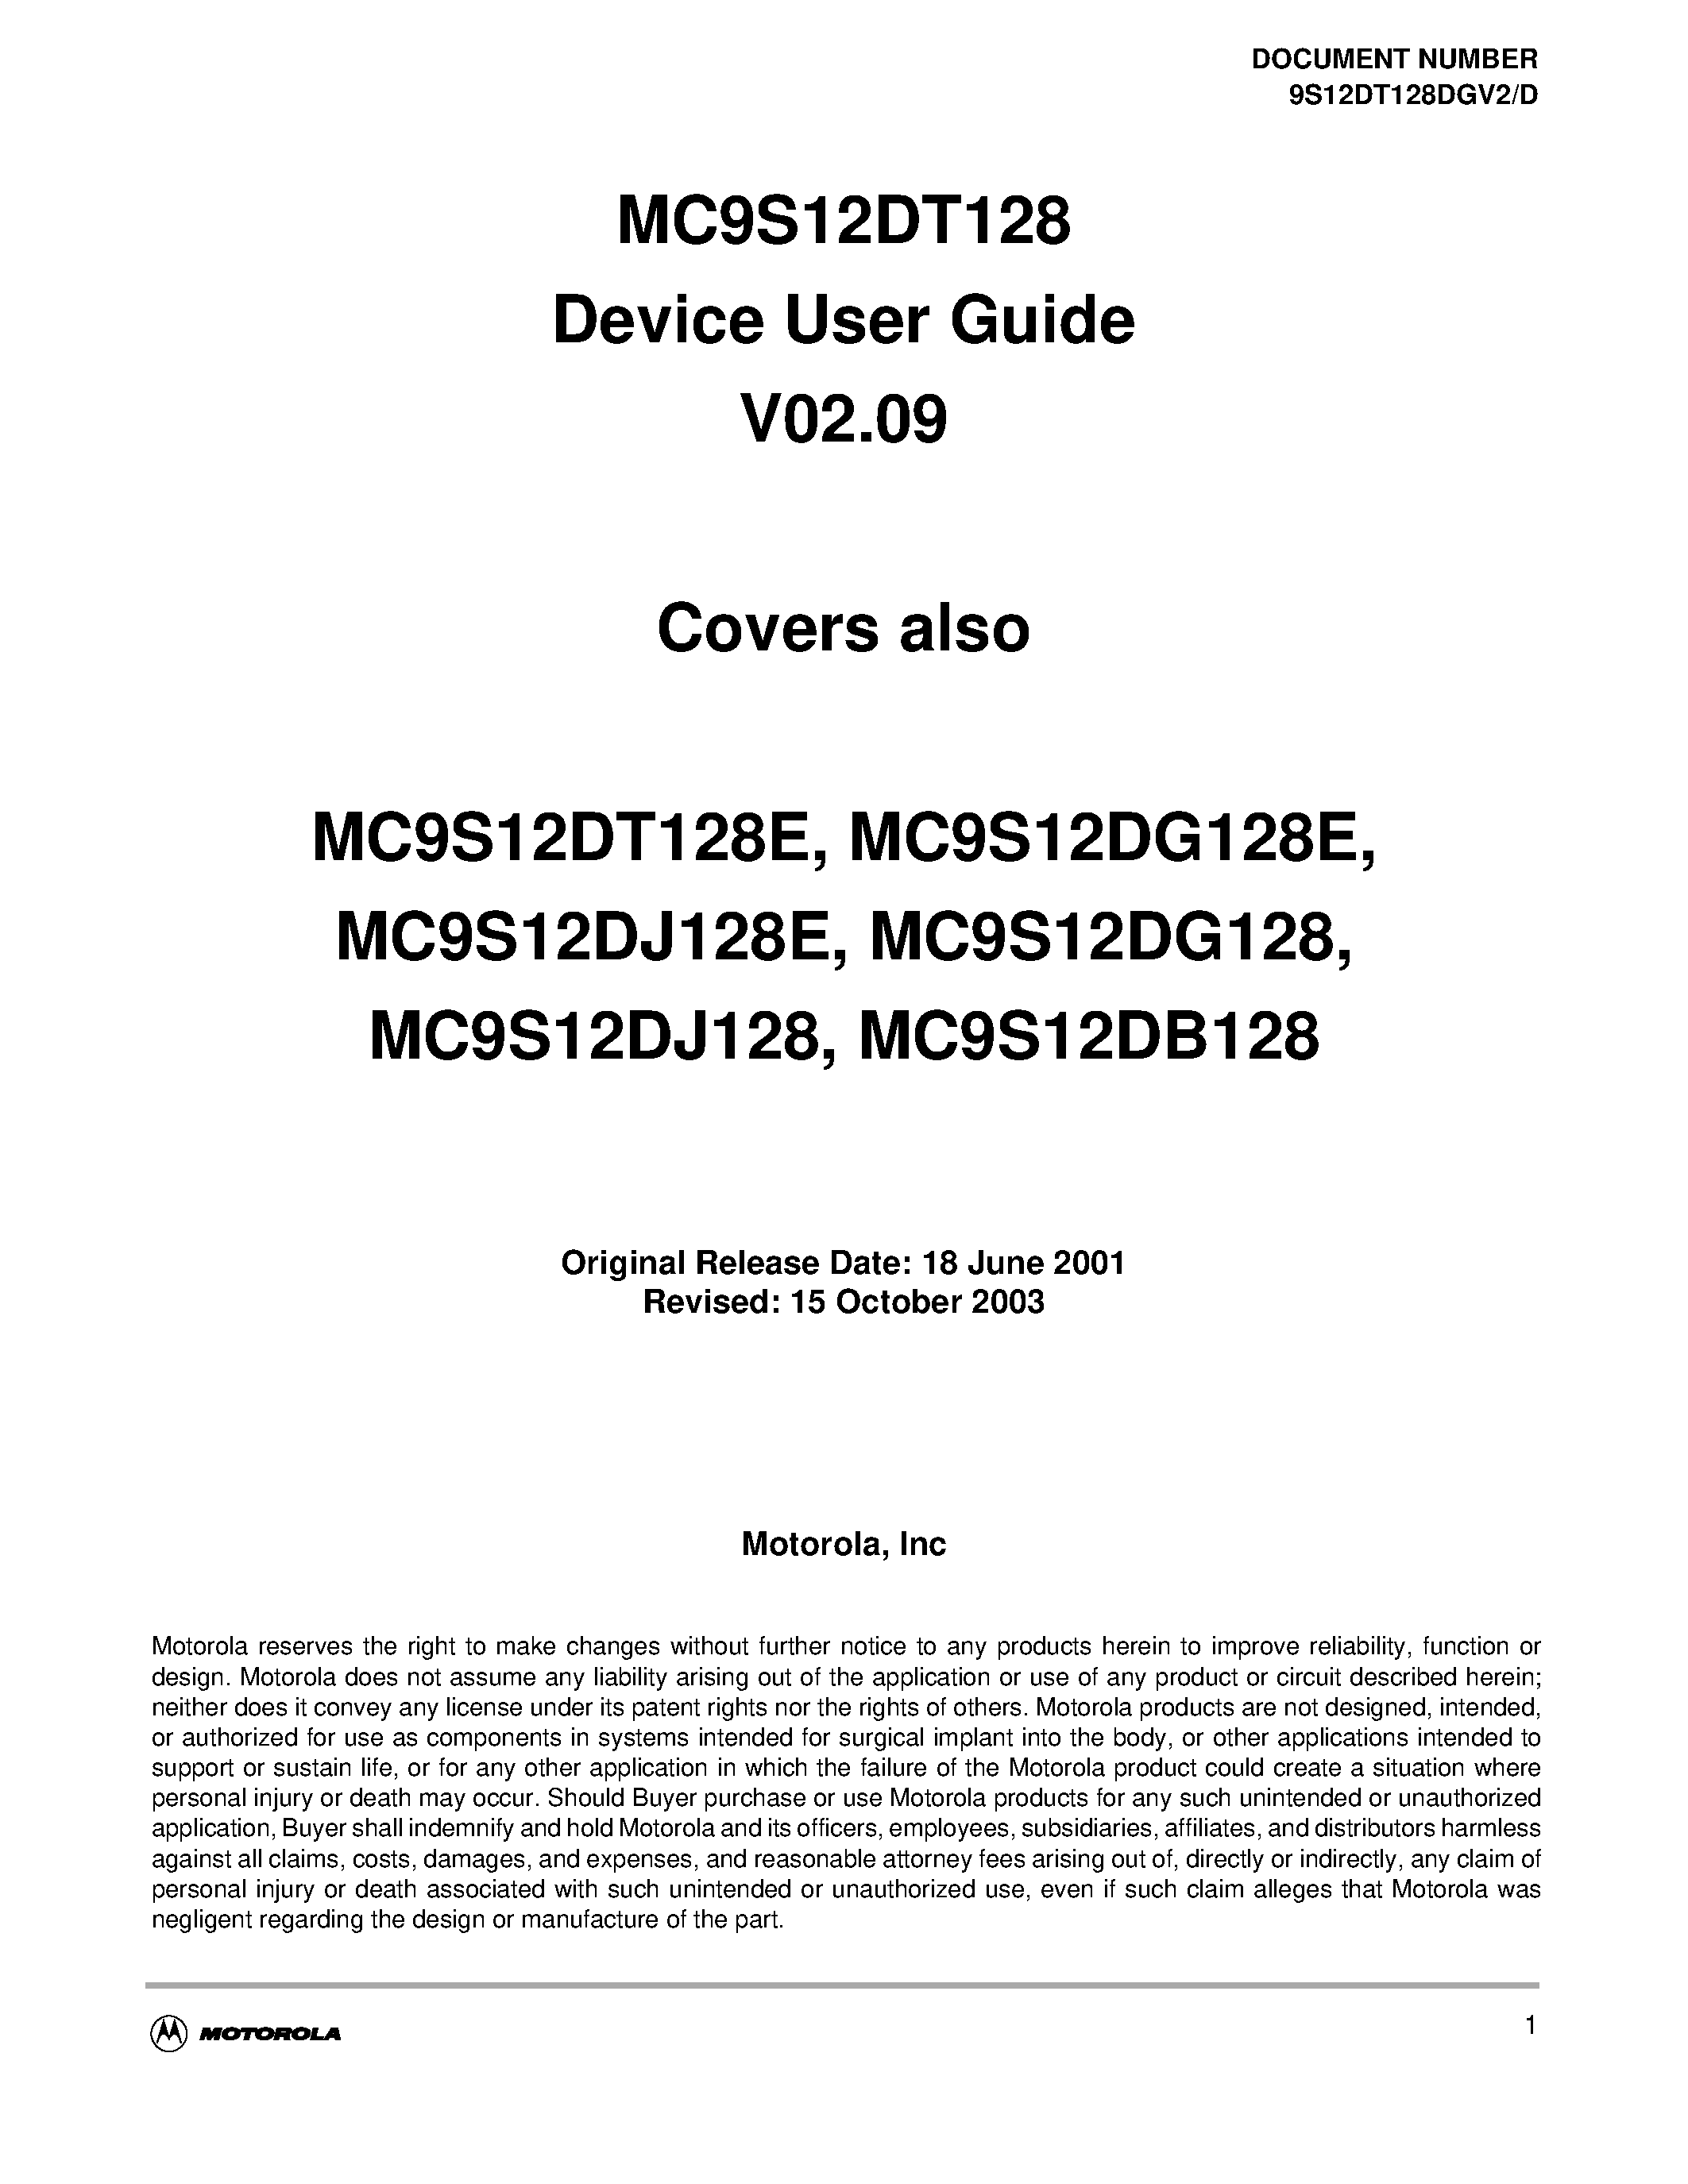 Даташит S12CRGV4 - MC9S12DT128 Device User Guide V02.09 страница 1